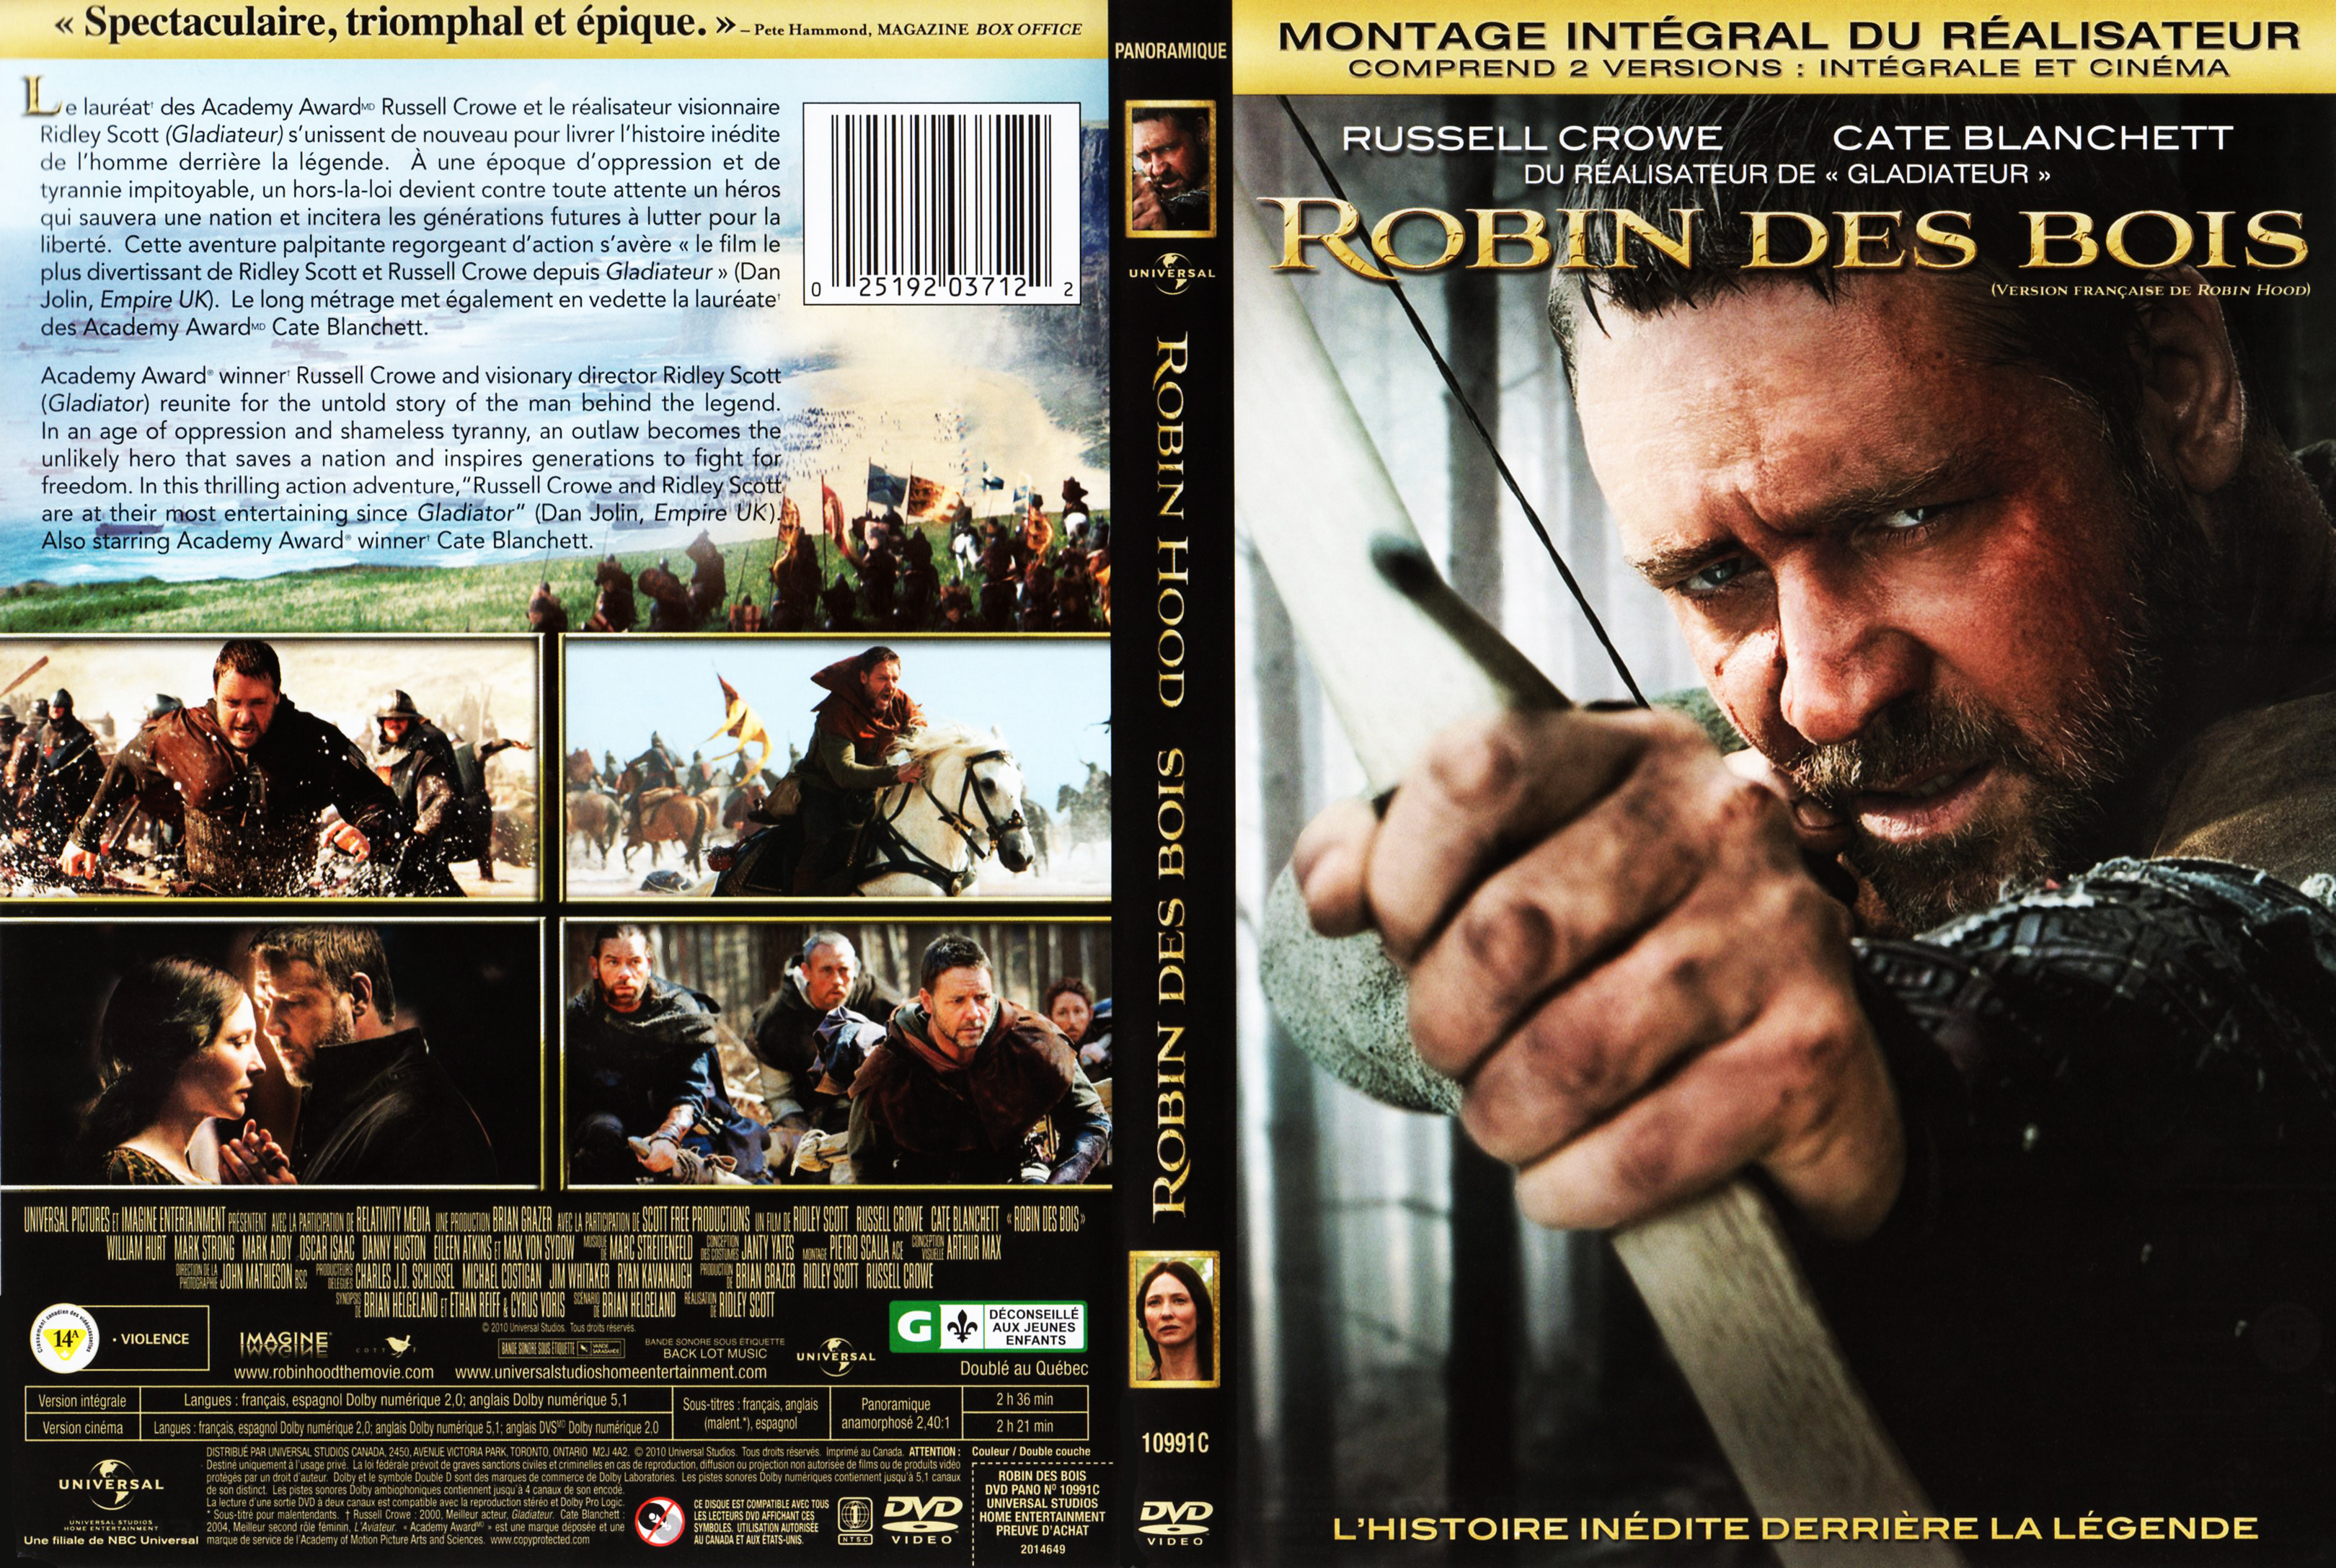 Jaquette DVD Robin des bois - Robin Hood (Canadienne)